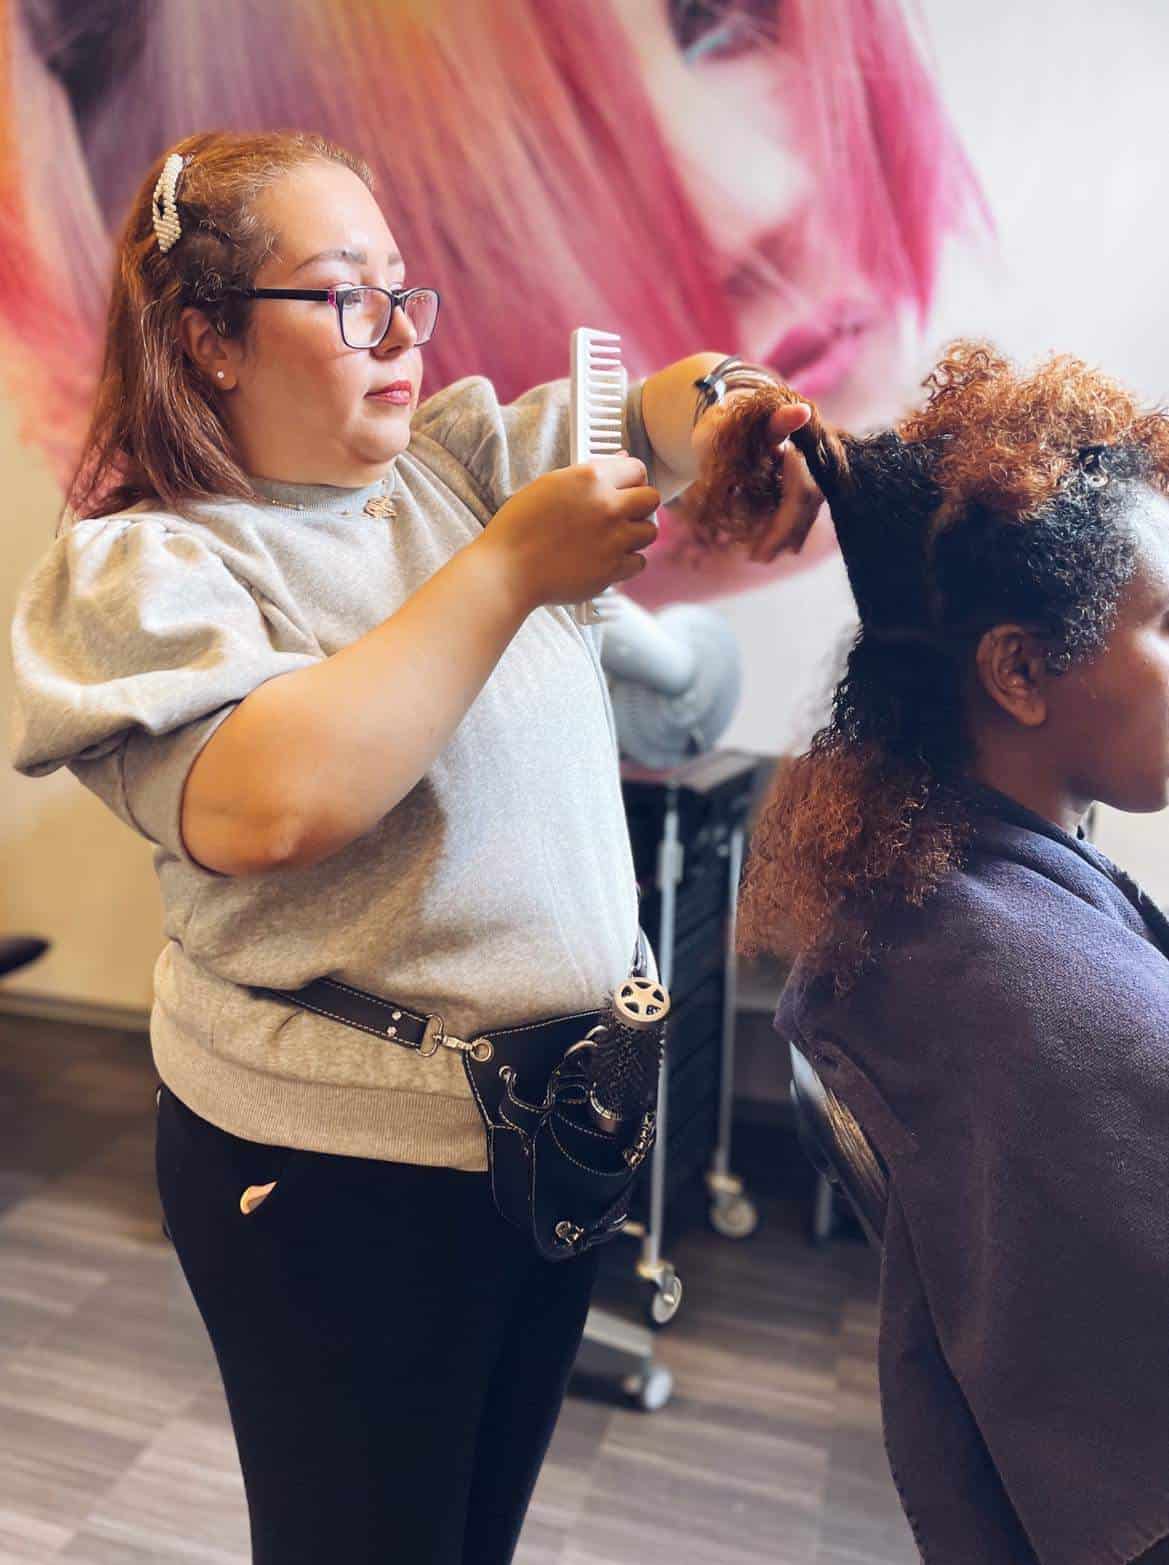 Layal ordner håret til en kunde i frisørsalongen